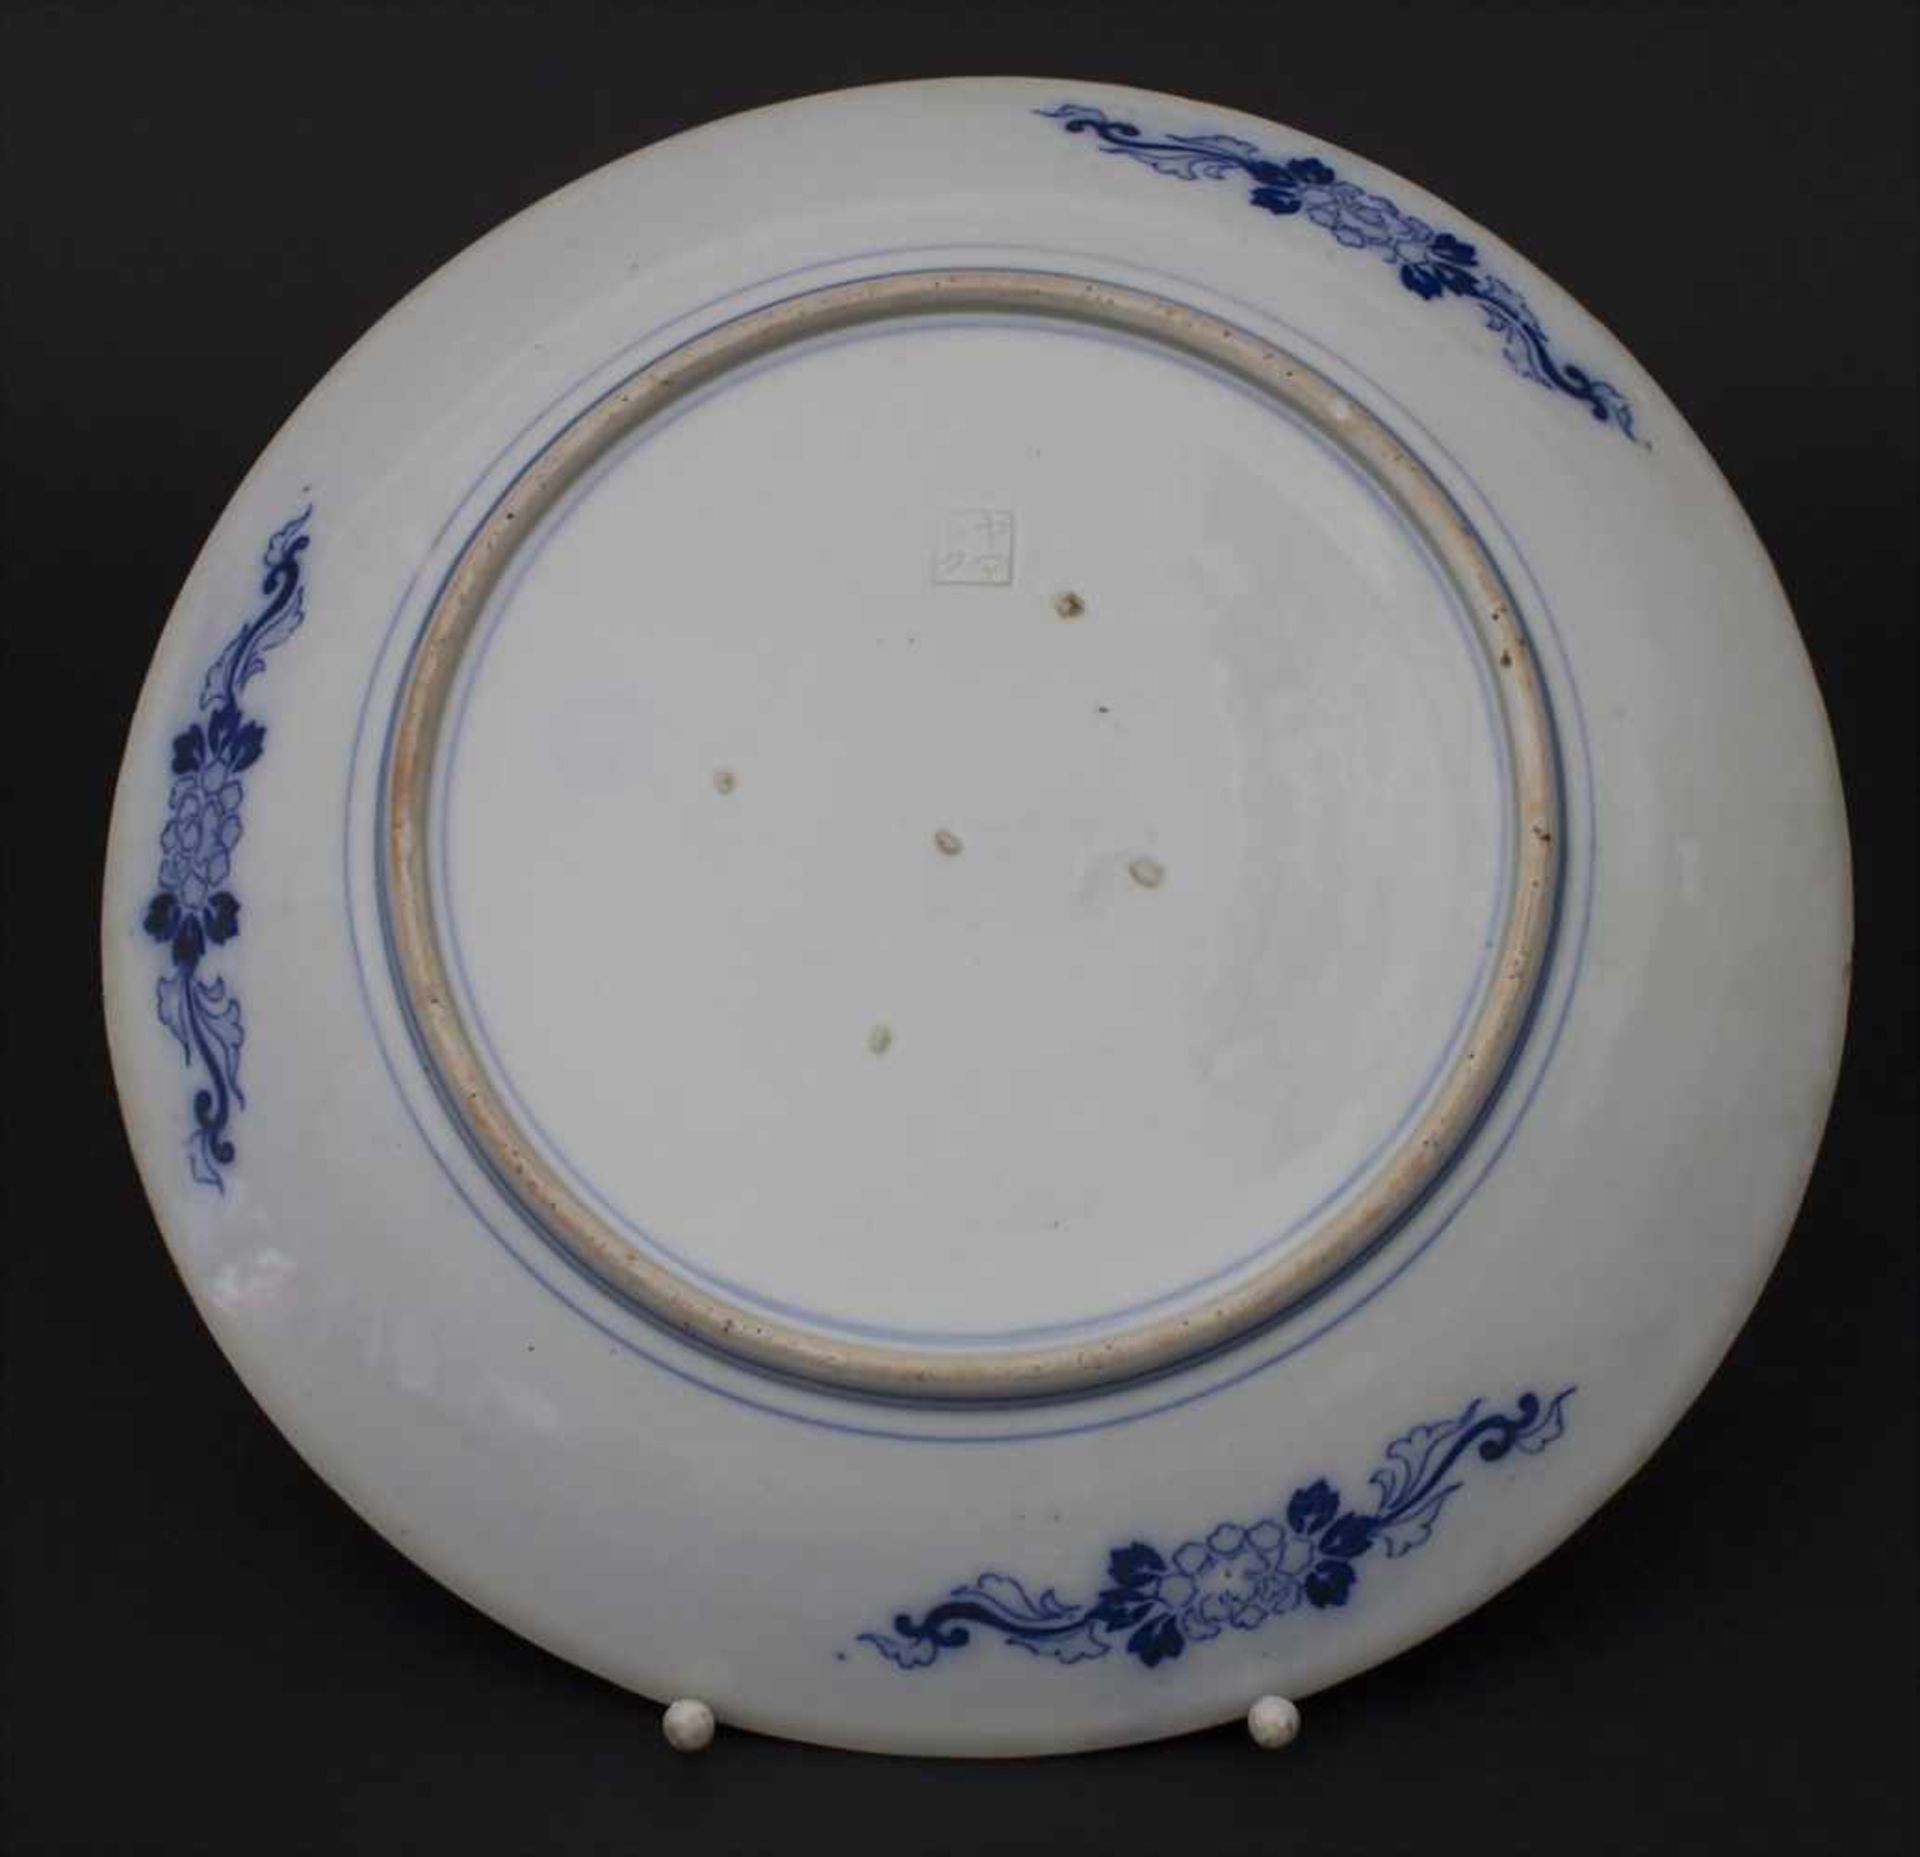 Große Platte / A large plate, Japan, um 1900Material: Porzellan, blau bemalt, glasiert, Rand braun - Bild 4 aus 7